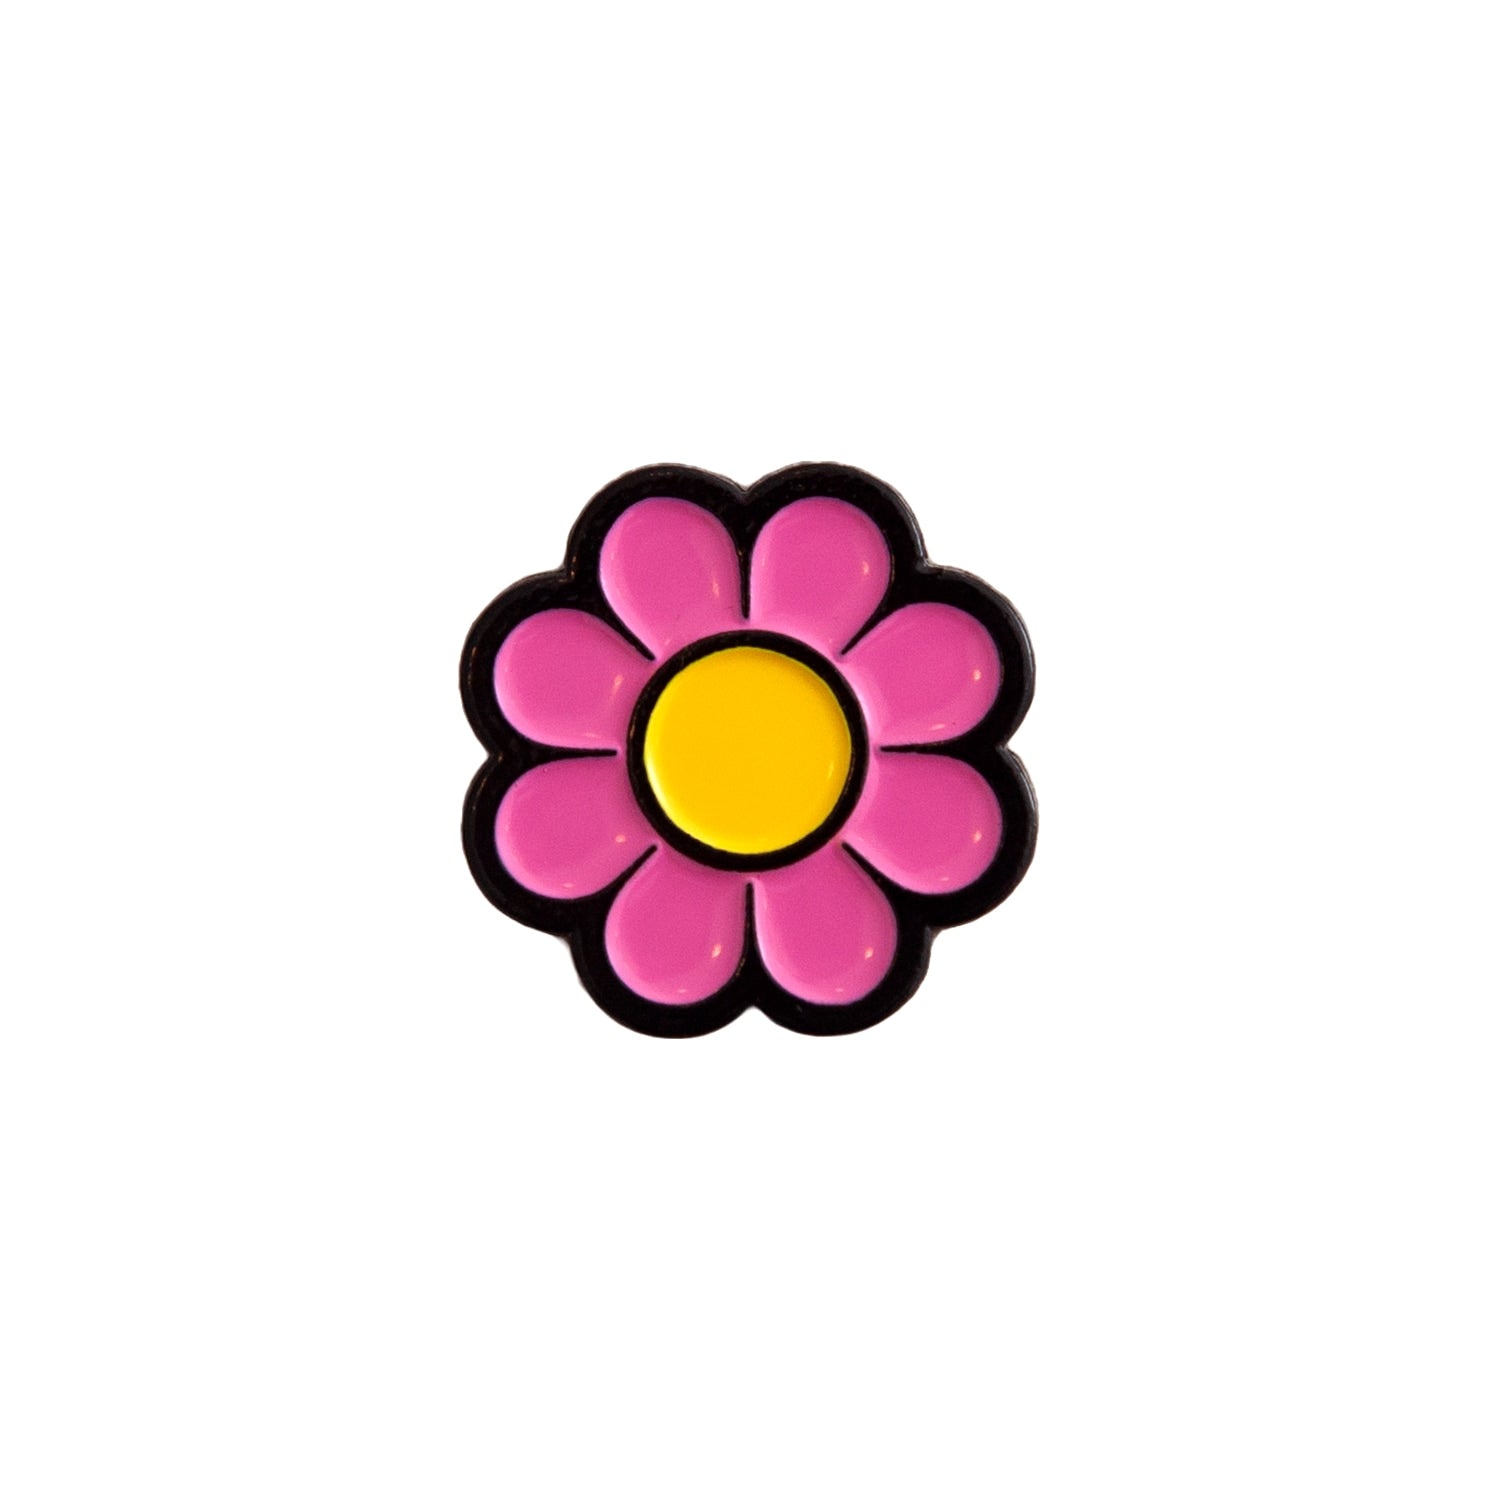 Pin on Flower power